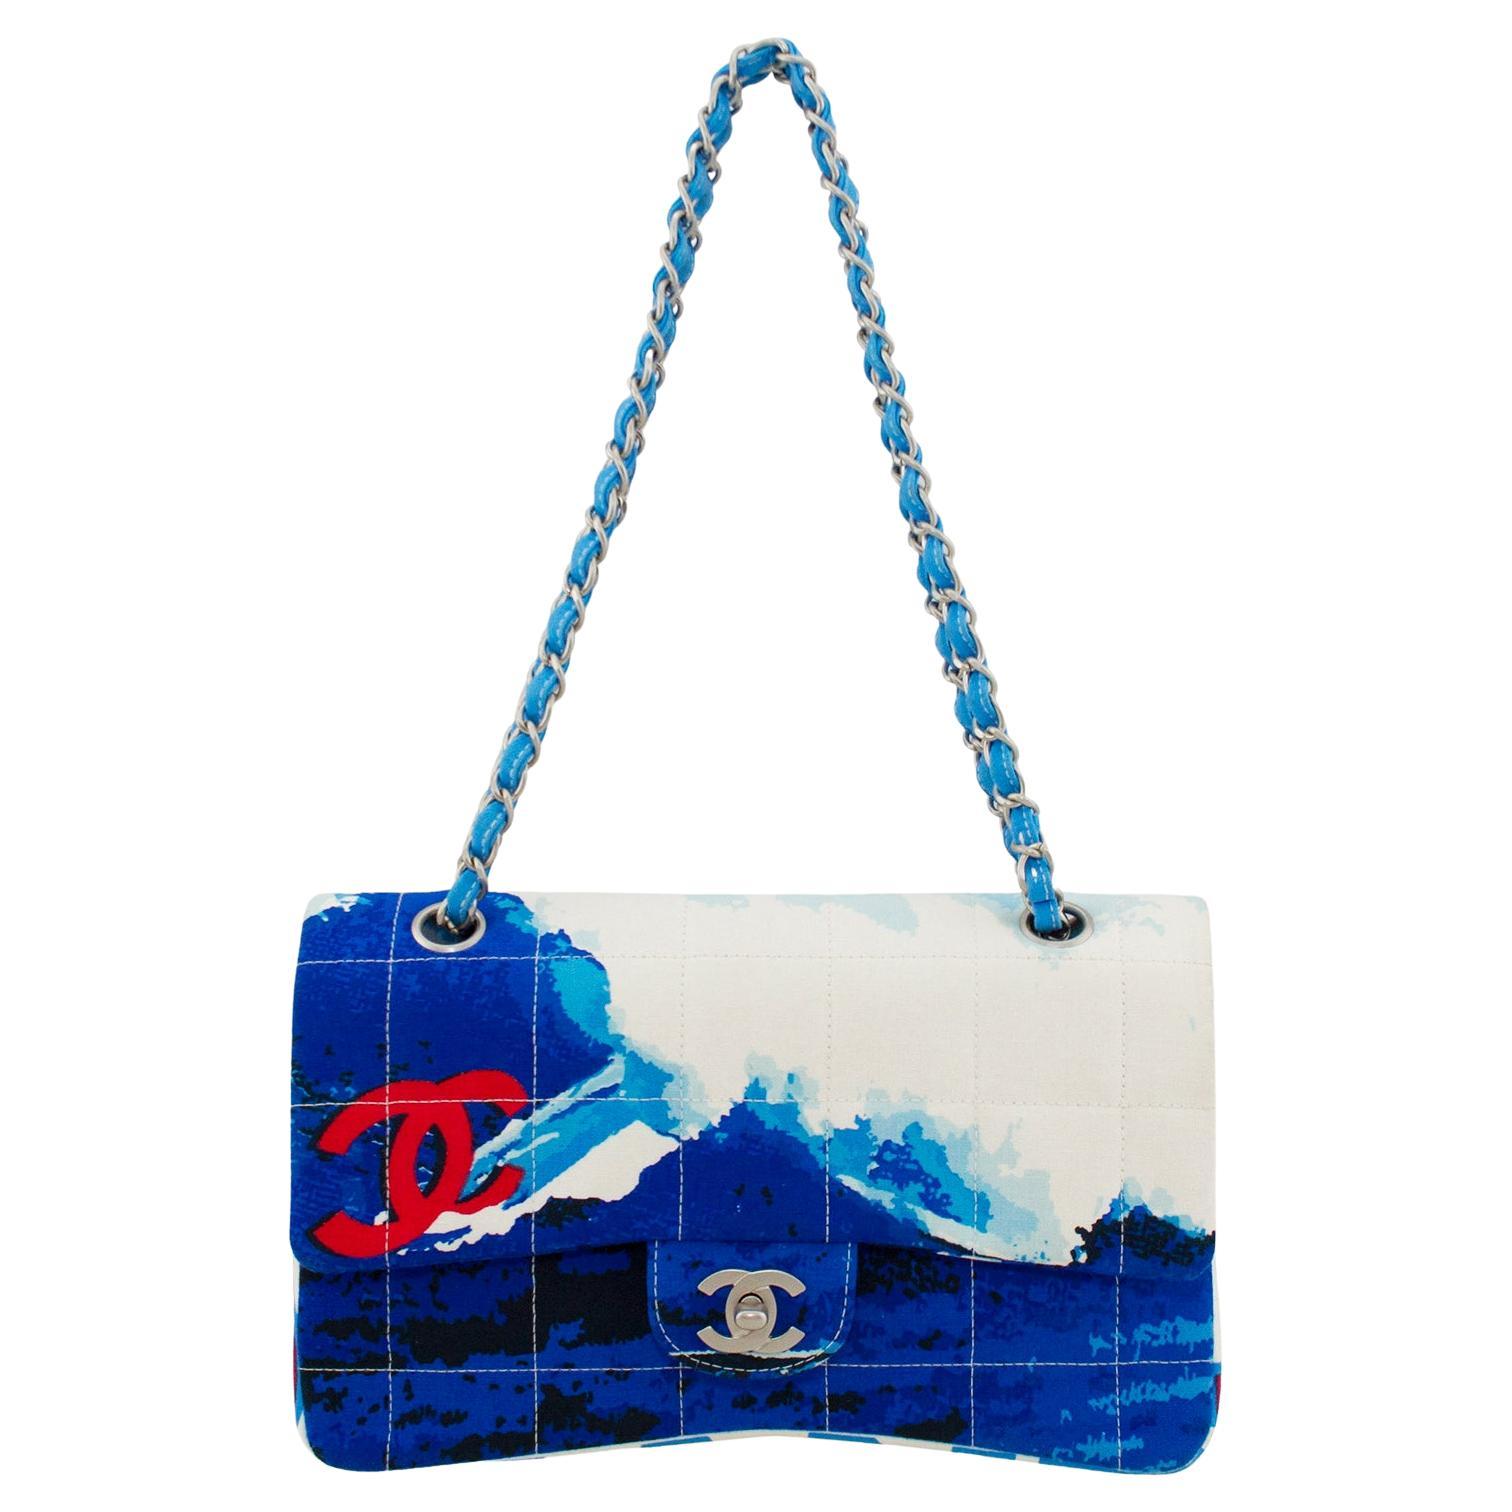 Collectable 2002 Chanel Surf Line Canvas 2.55 Flap Bag